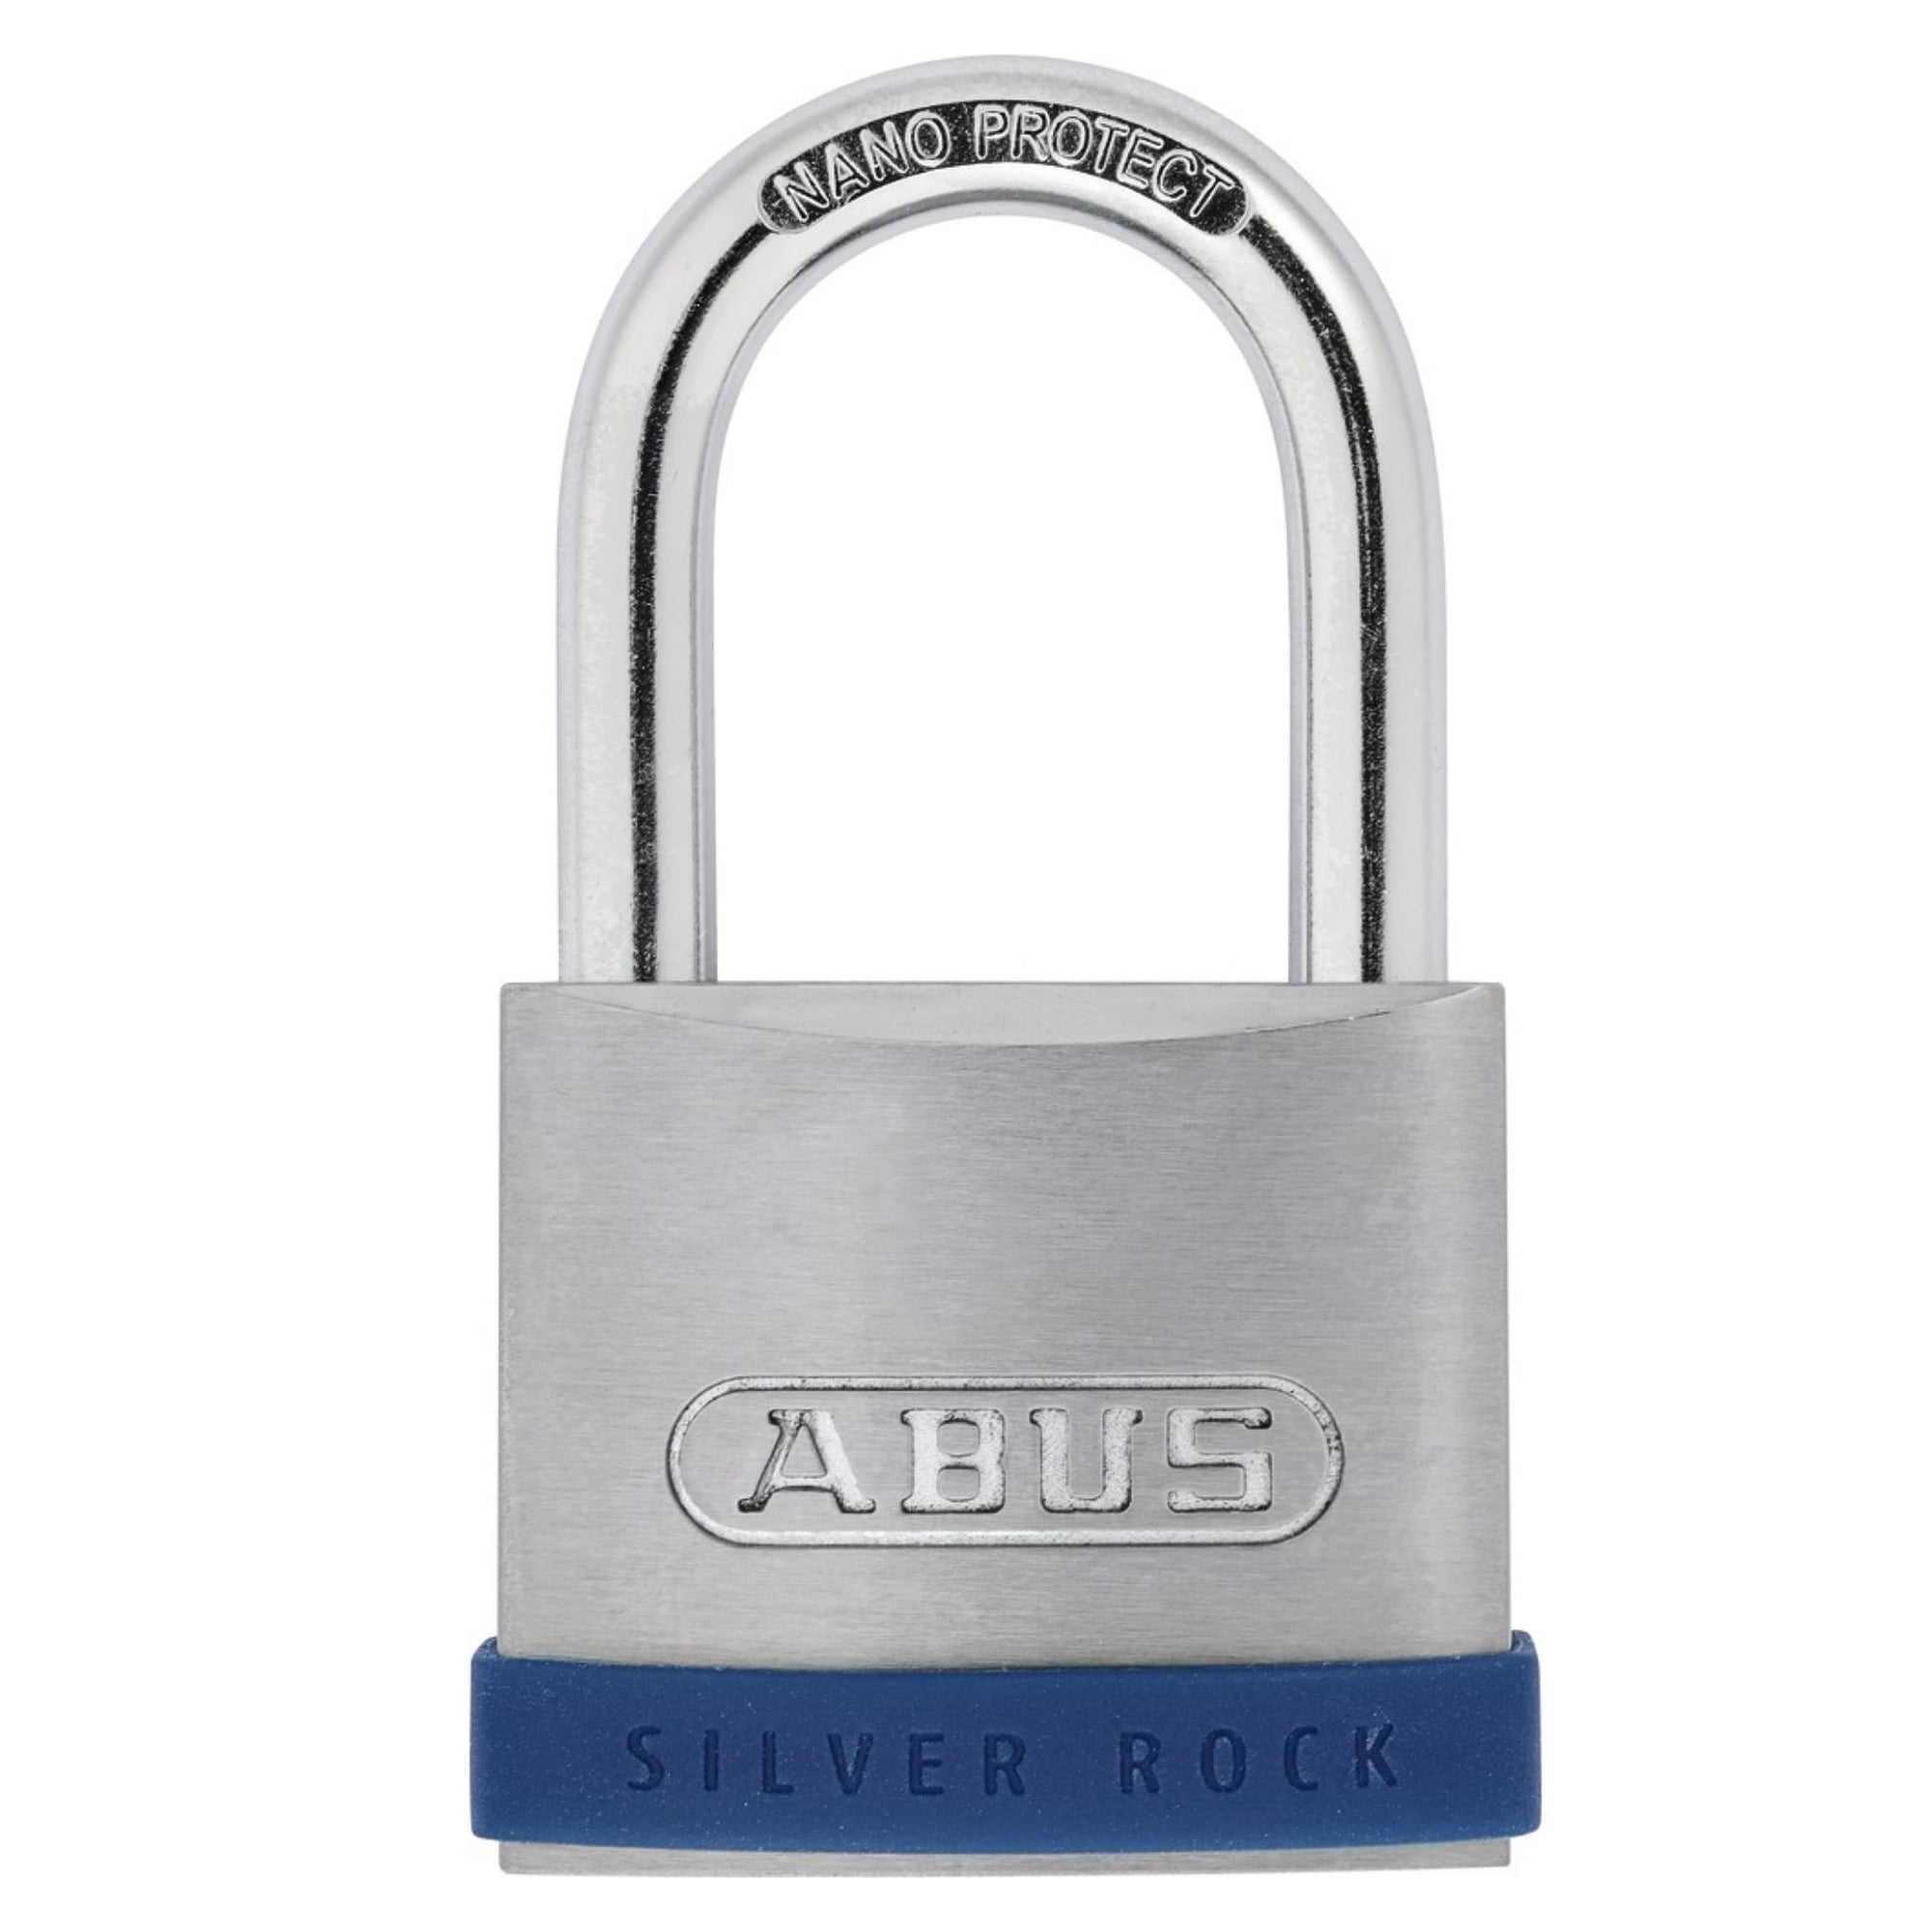 Abus 5/50HB25 KA # 6516 Padlock Silver Rock Zinc Locks Keyed Alike to KA# 6516 for Toolbox Security - The Lock Source